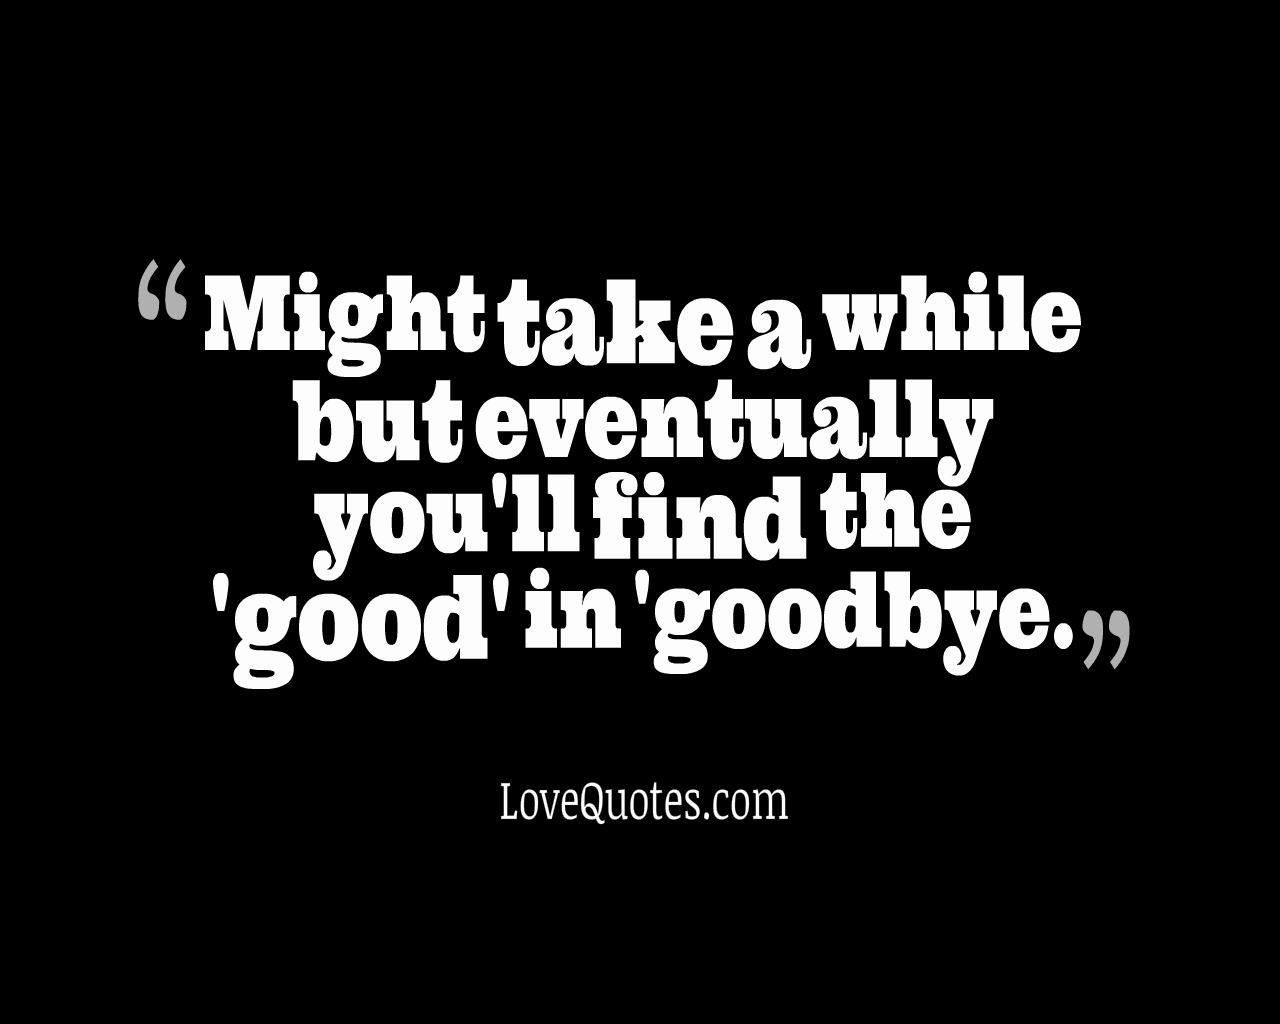 The Good In Goodbye